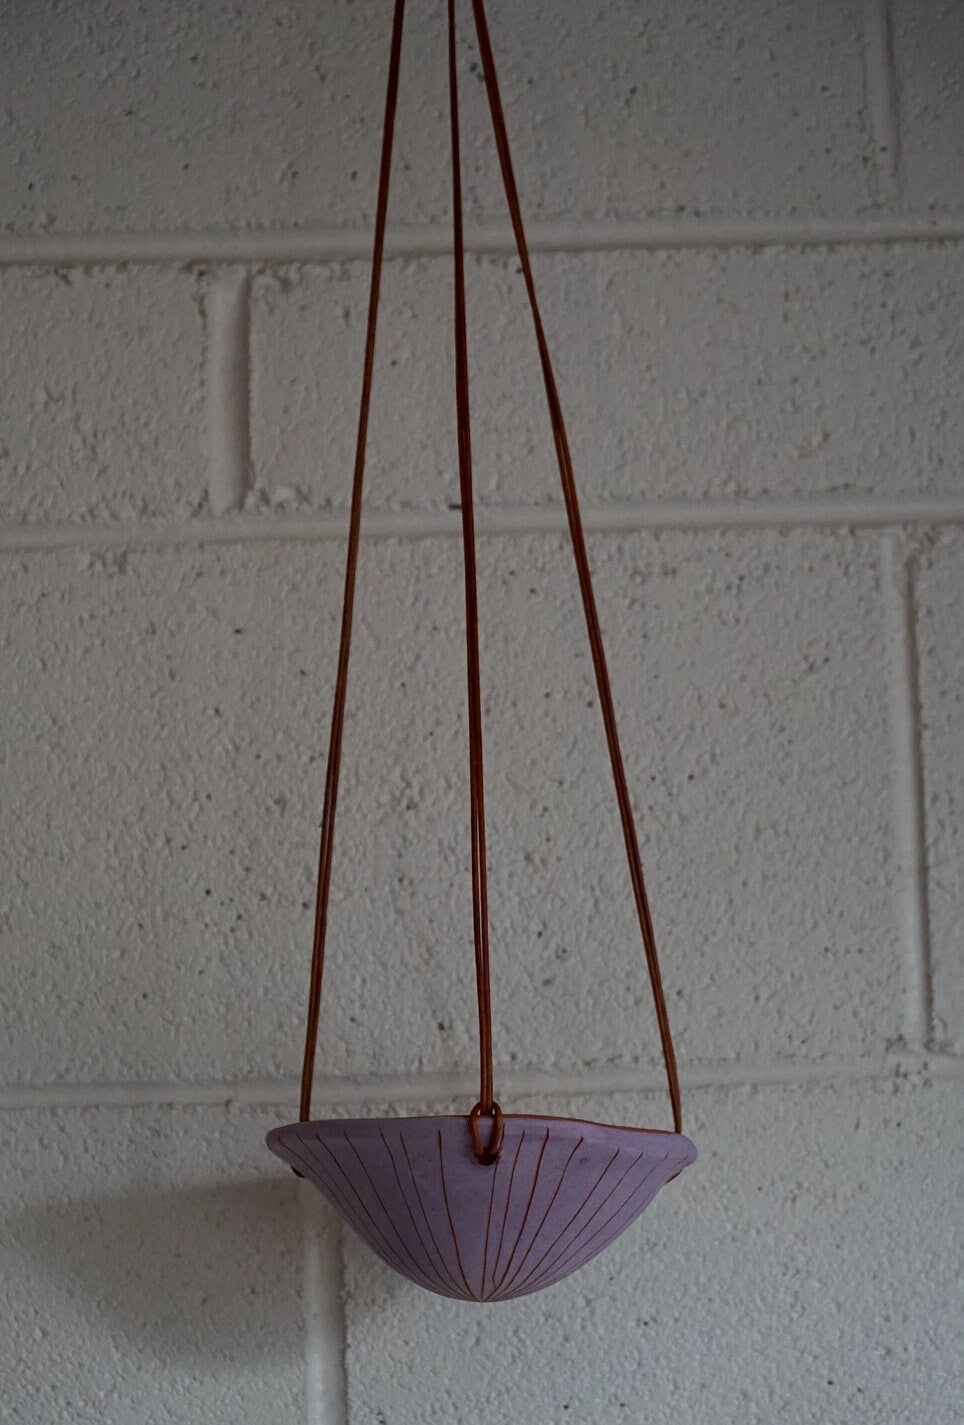 Purple & Terracotta Hanging Planter w/ "Vertical Line" Design - Hanging Pot with Carved Design - Succulent, Cactus, Herb, Air Plant, Etc